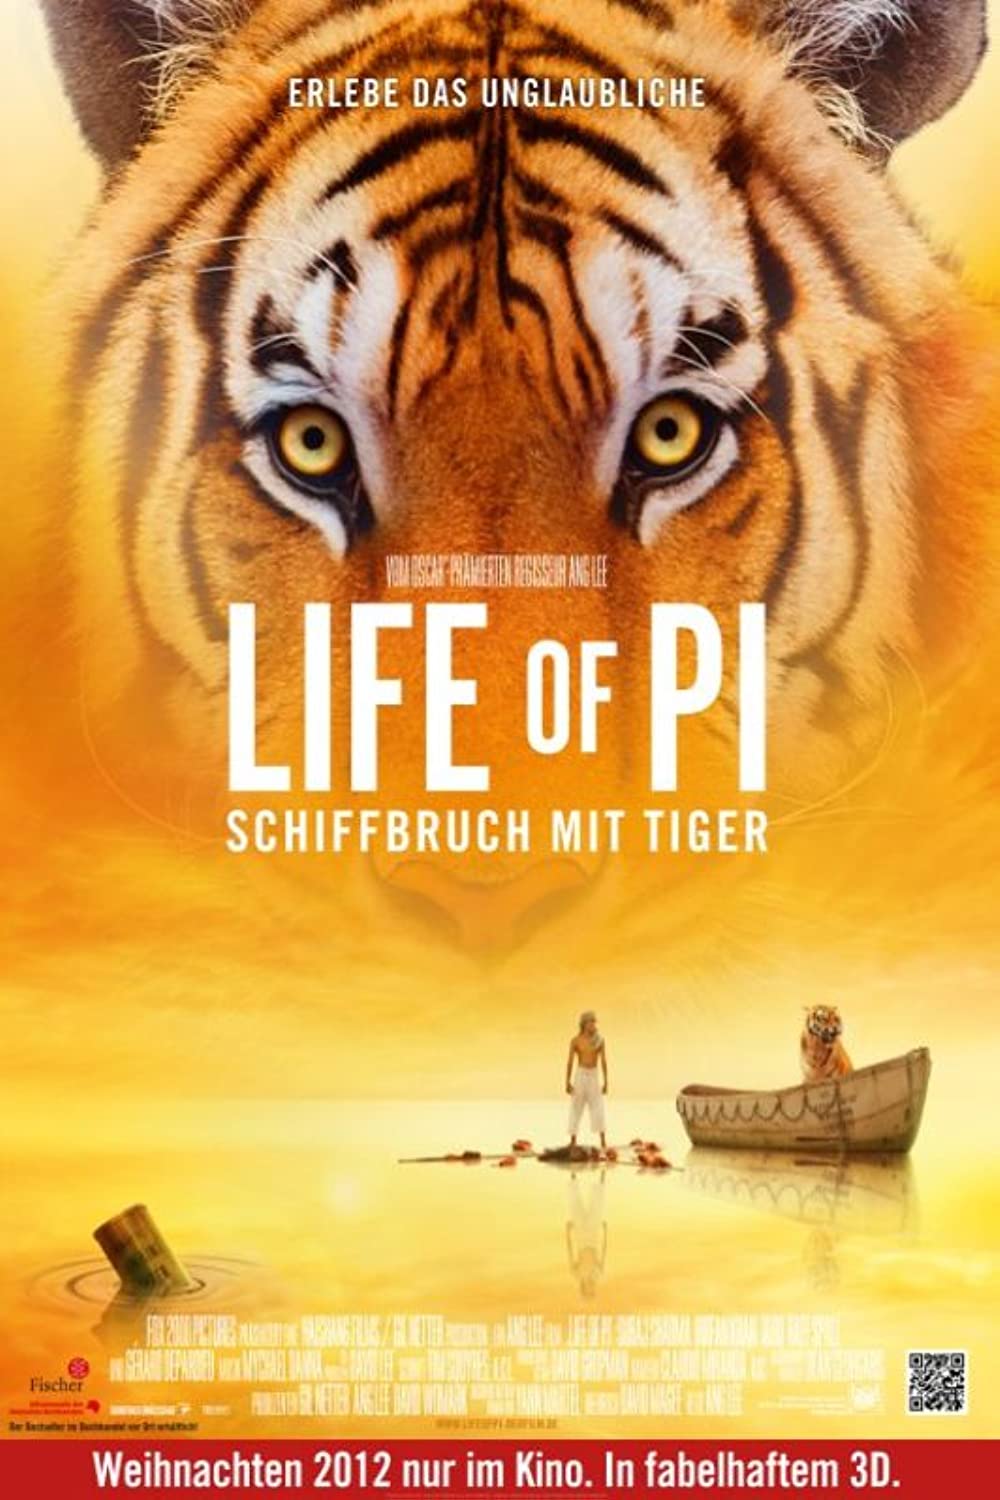 Filmbeschreibung zu Life of Pi